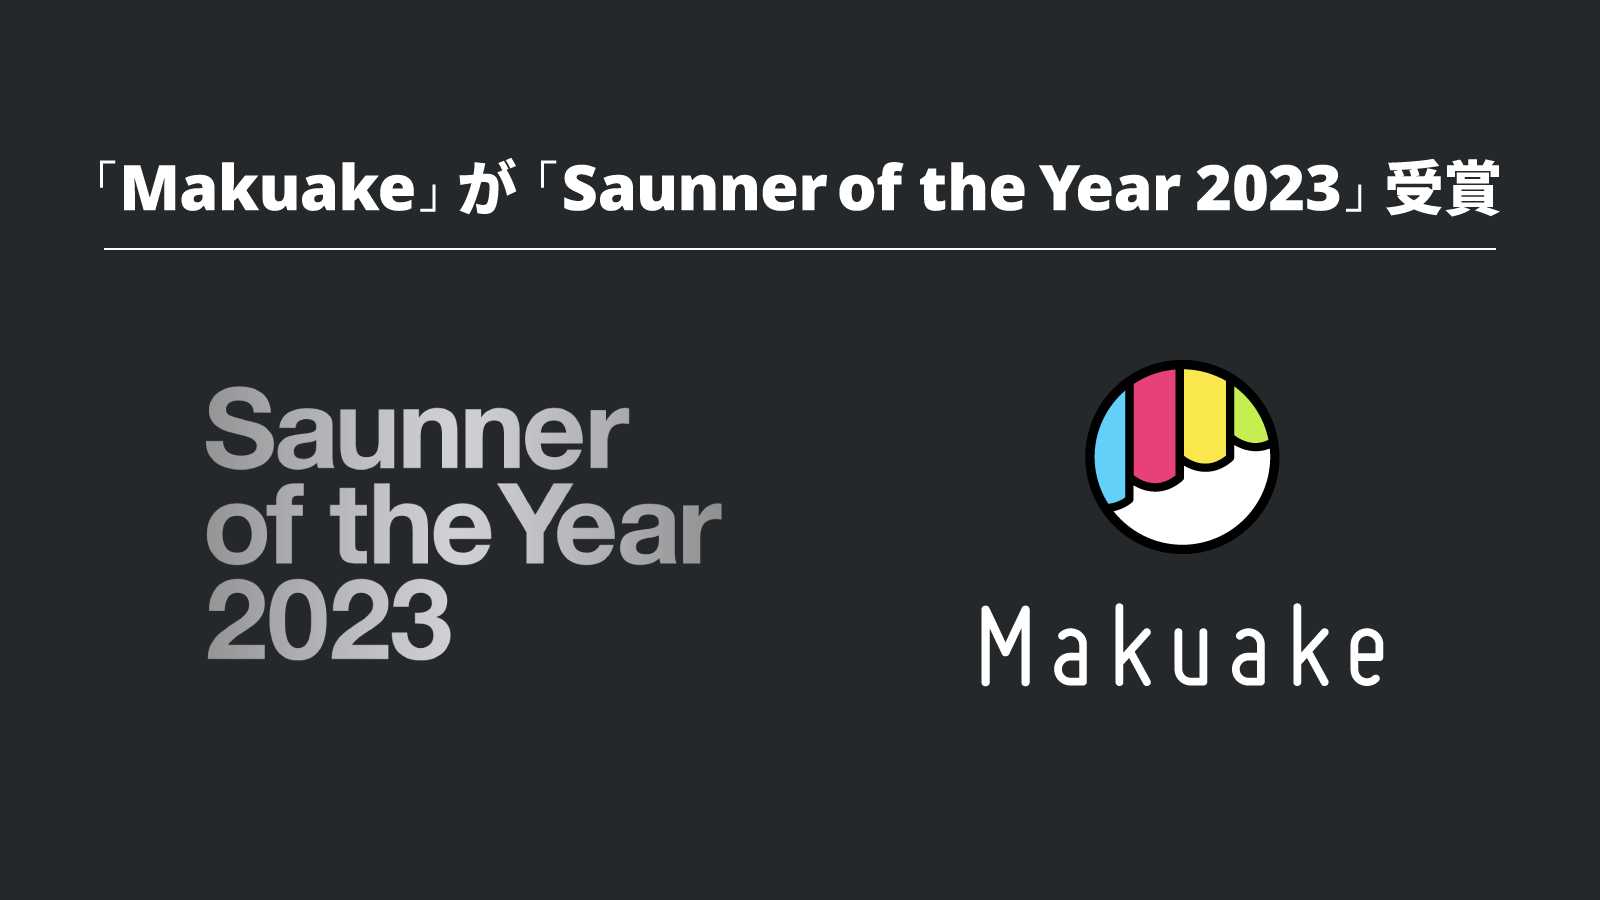 uMakuakevuSaunner of the Year 2023v `TEi֘AvWFNg̉wz3.5~˔jBTEiƊEւ̍v]`